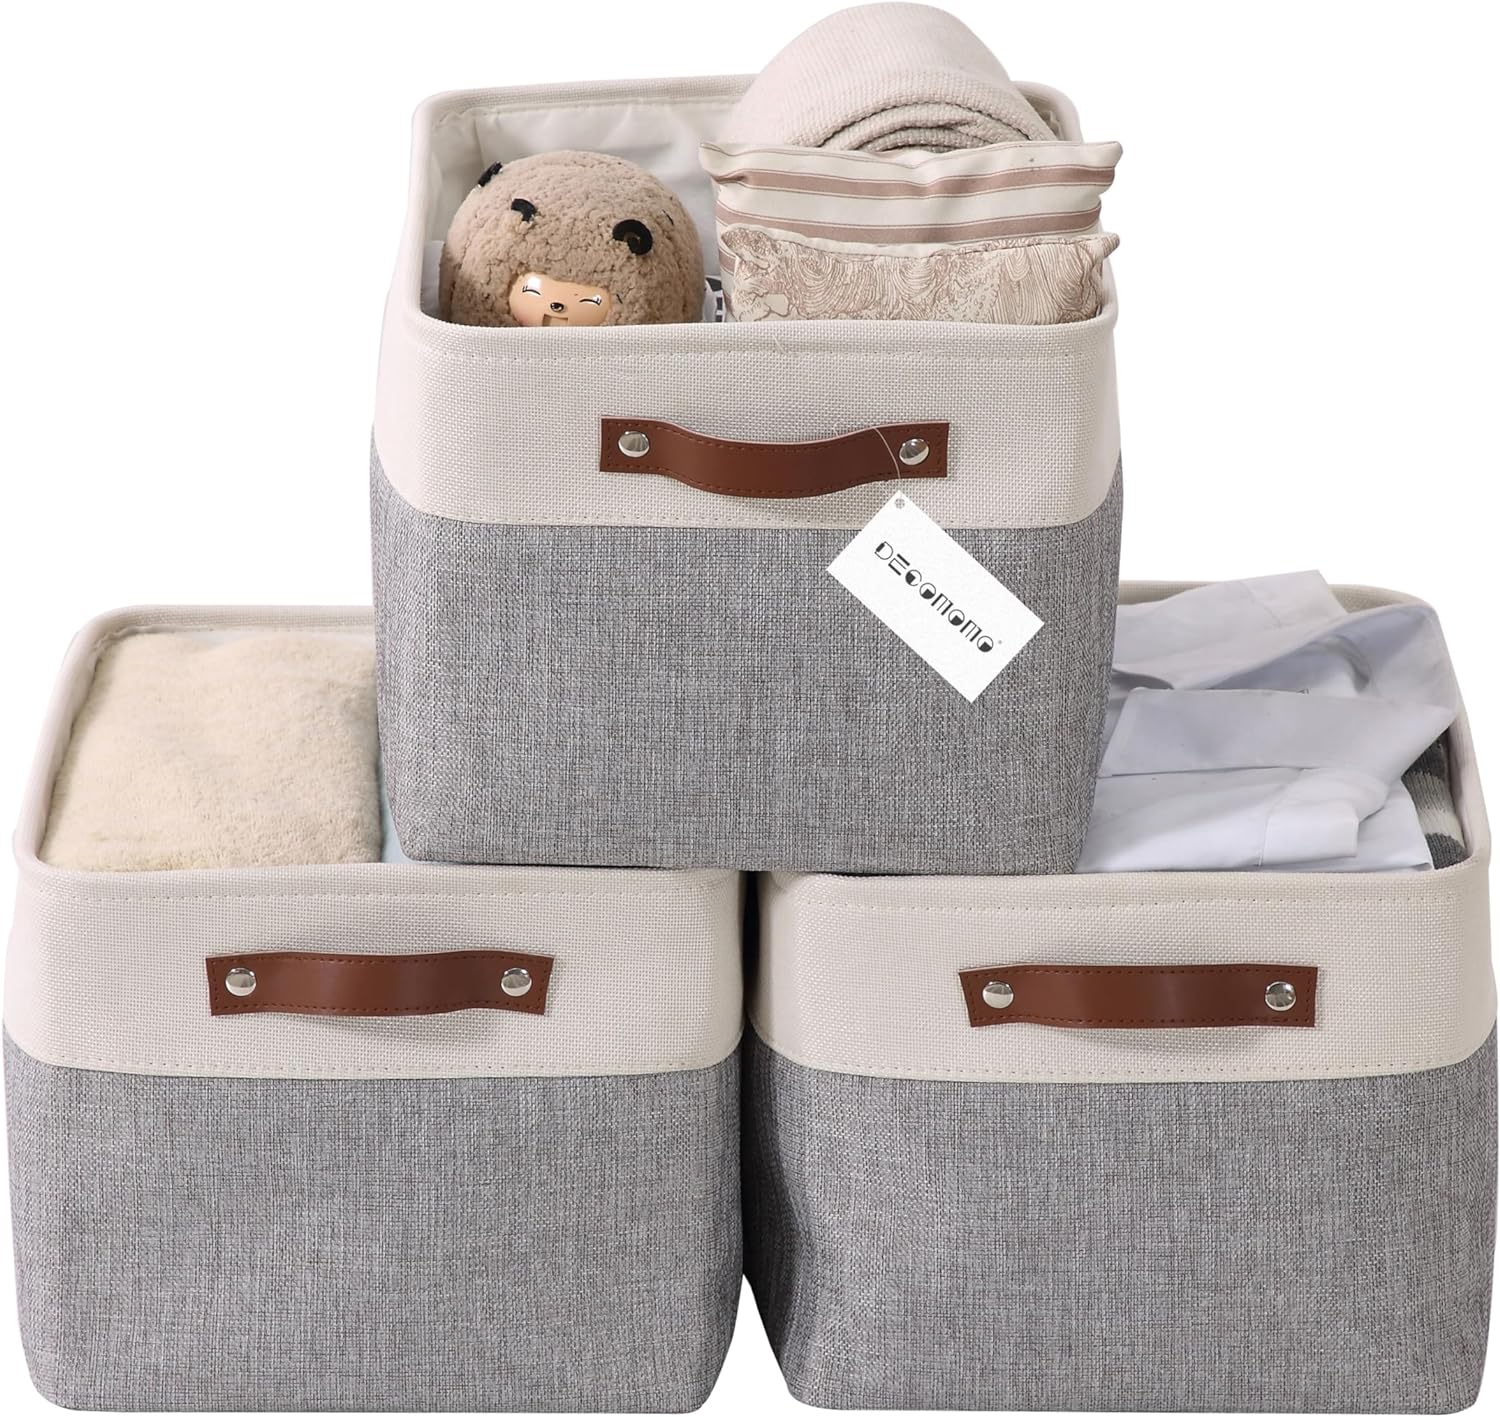  DECOMOMO Storage Bins | Fabric Storage Baskets for Shelves for Organizing Closet Shelf Nursery Toy | Decorative Large Linen Closet Organizer Bins with Handles (Grey and White, Large - 3 Pack) 